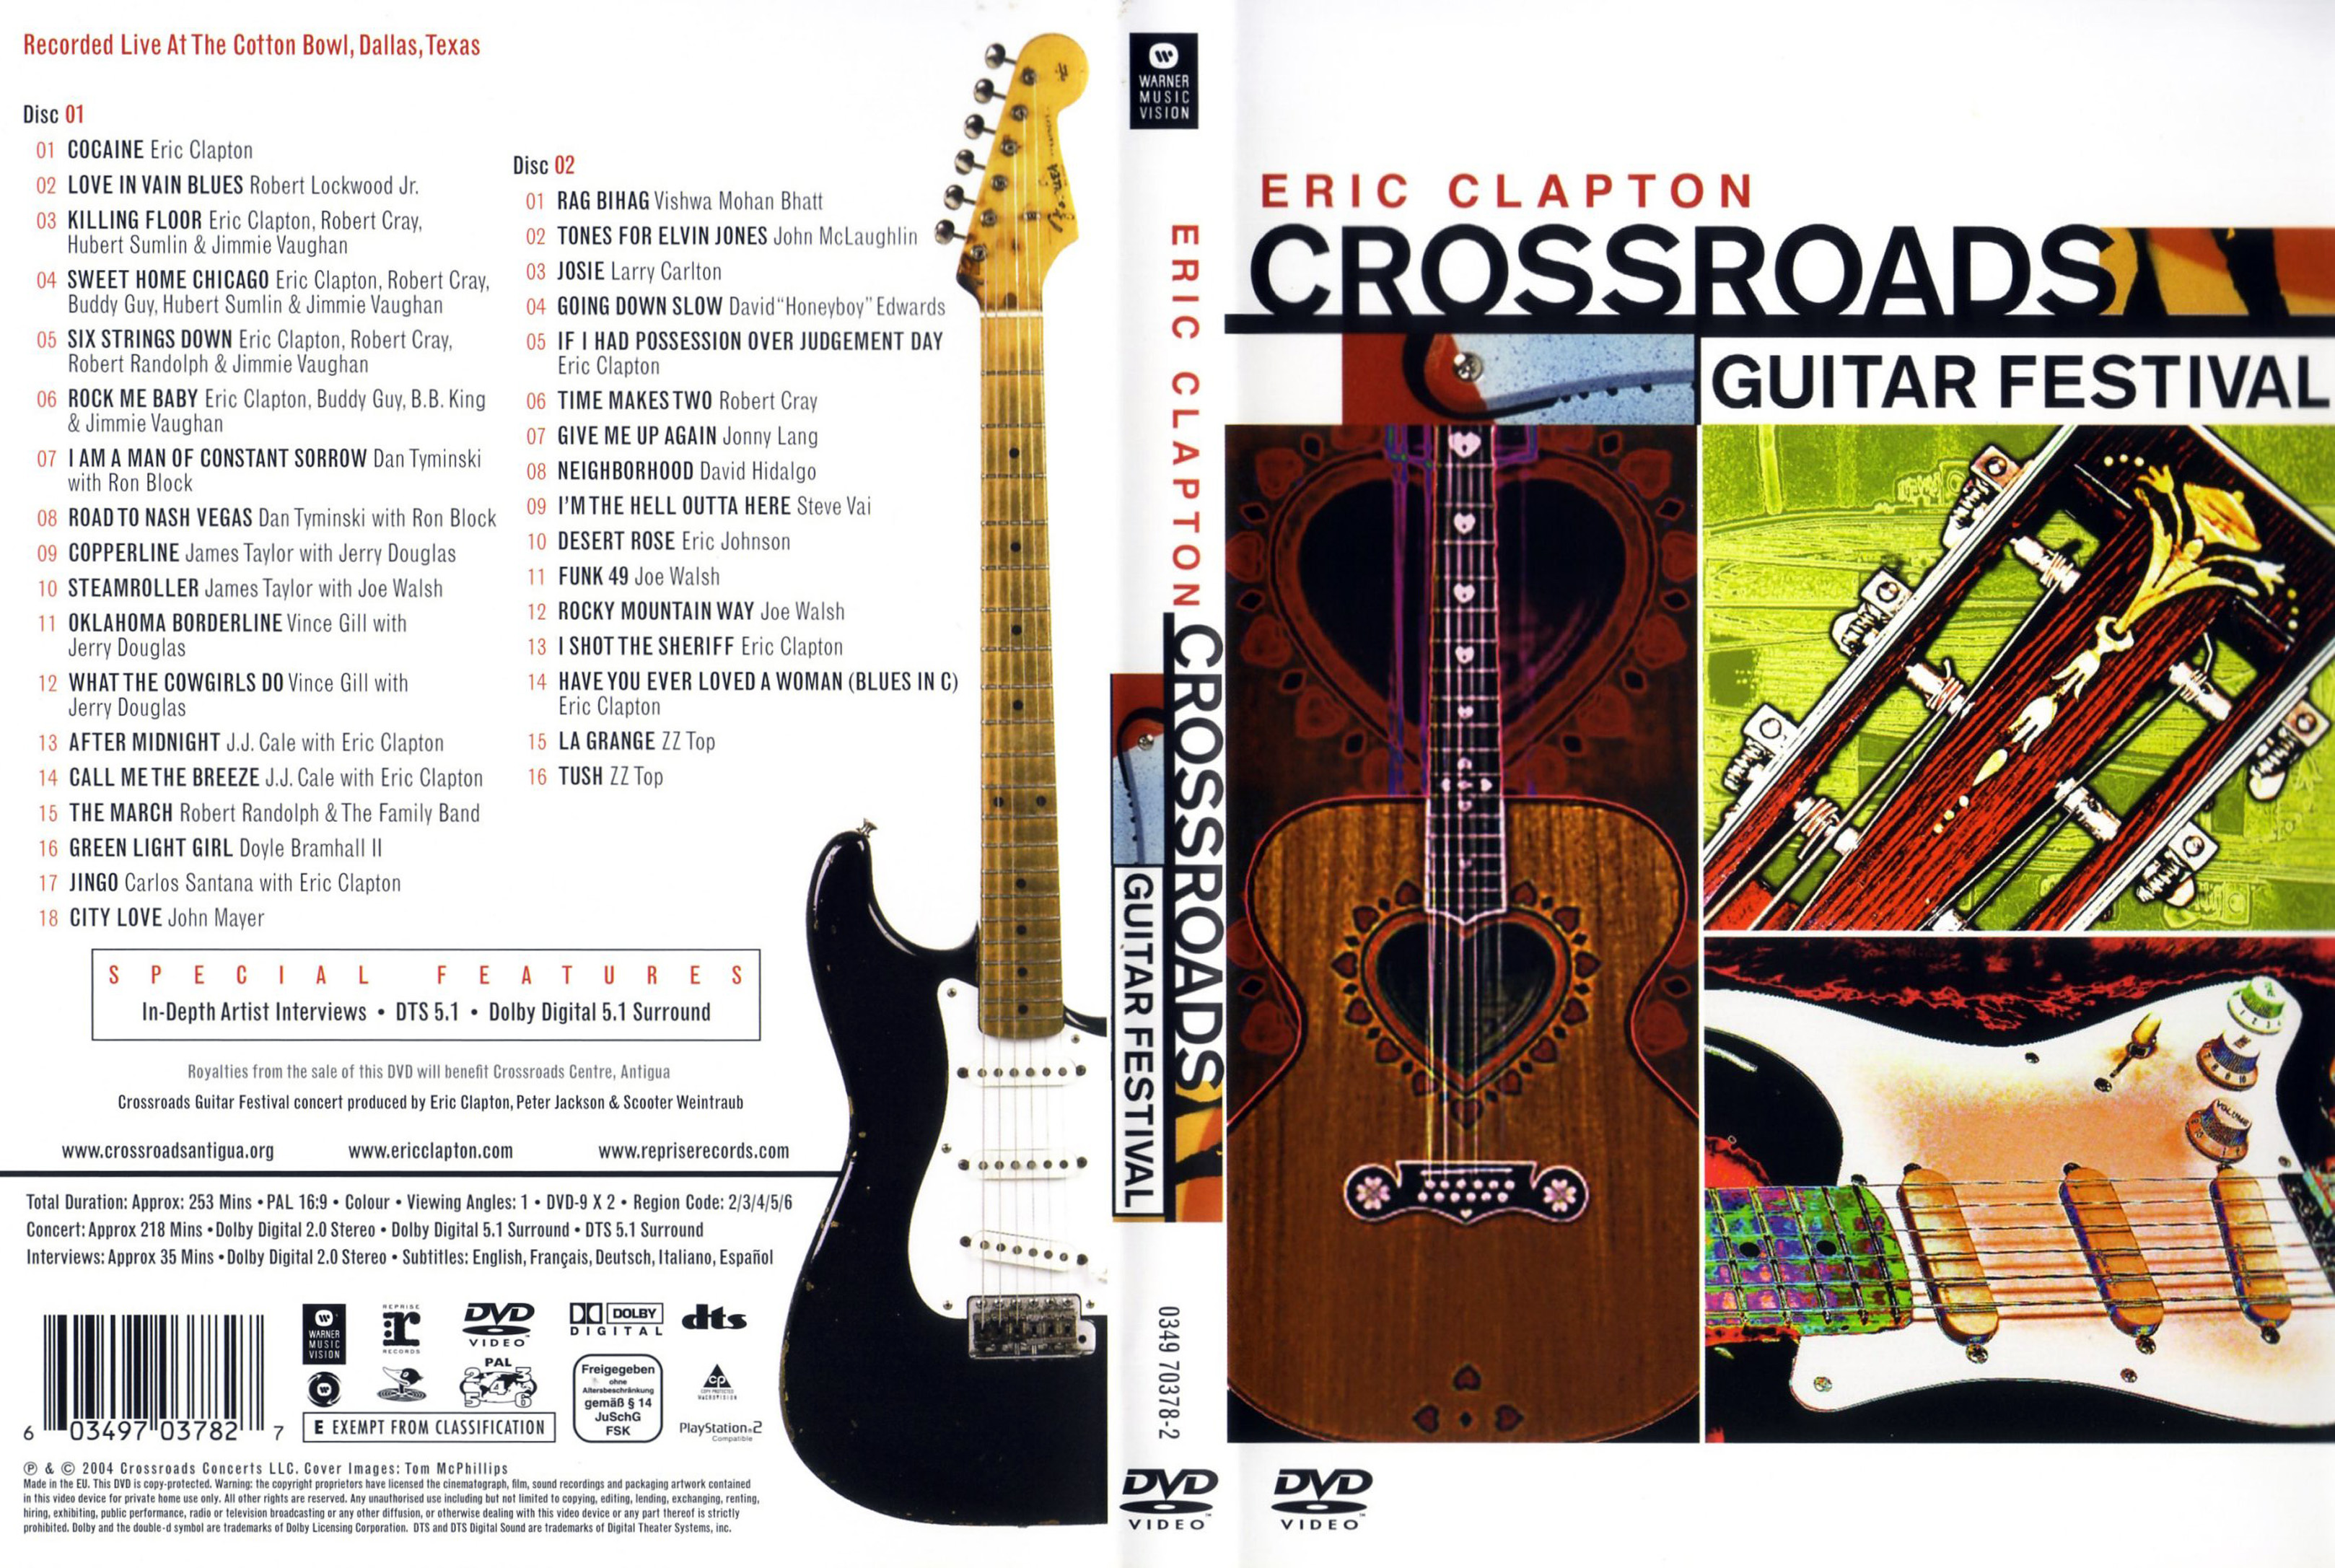 Jaquette DVD Eric Clapton - Crossroads Guitar Festival 2004